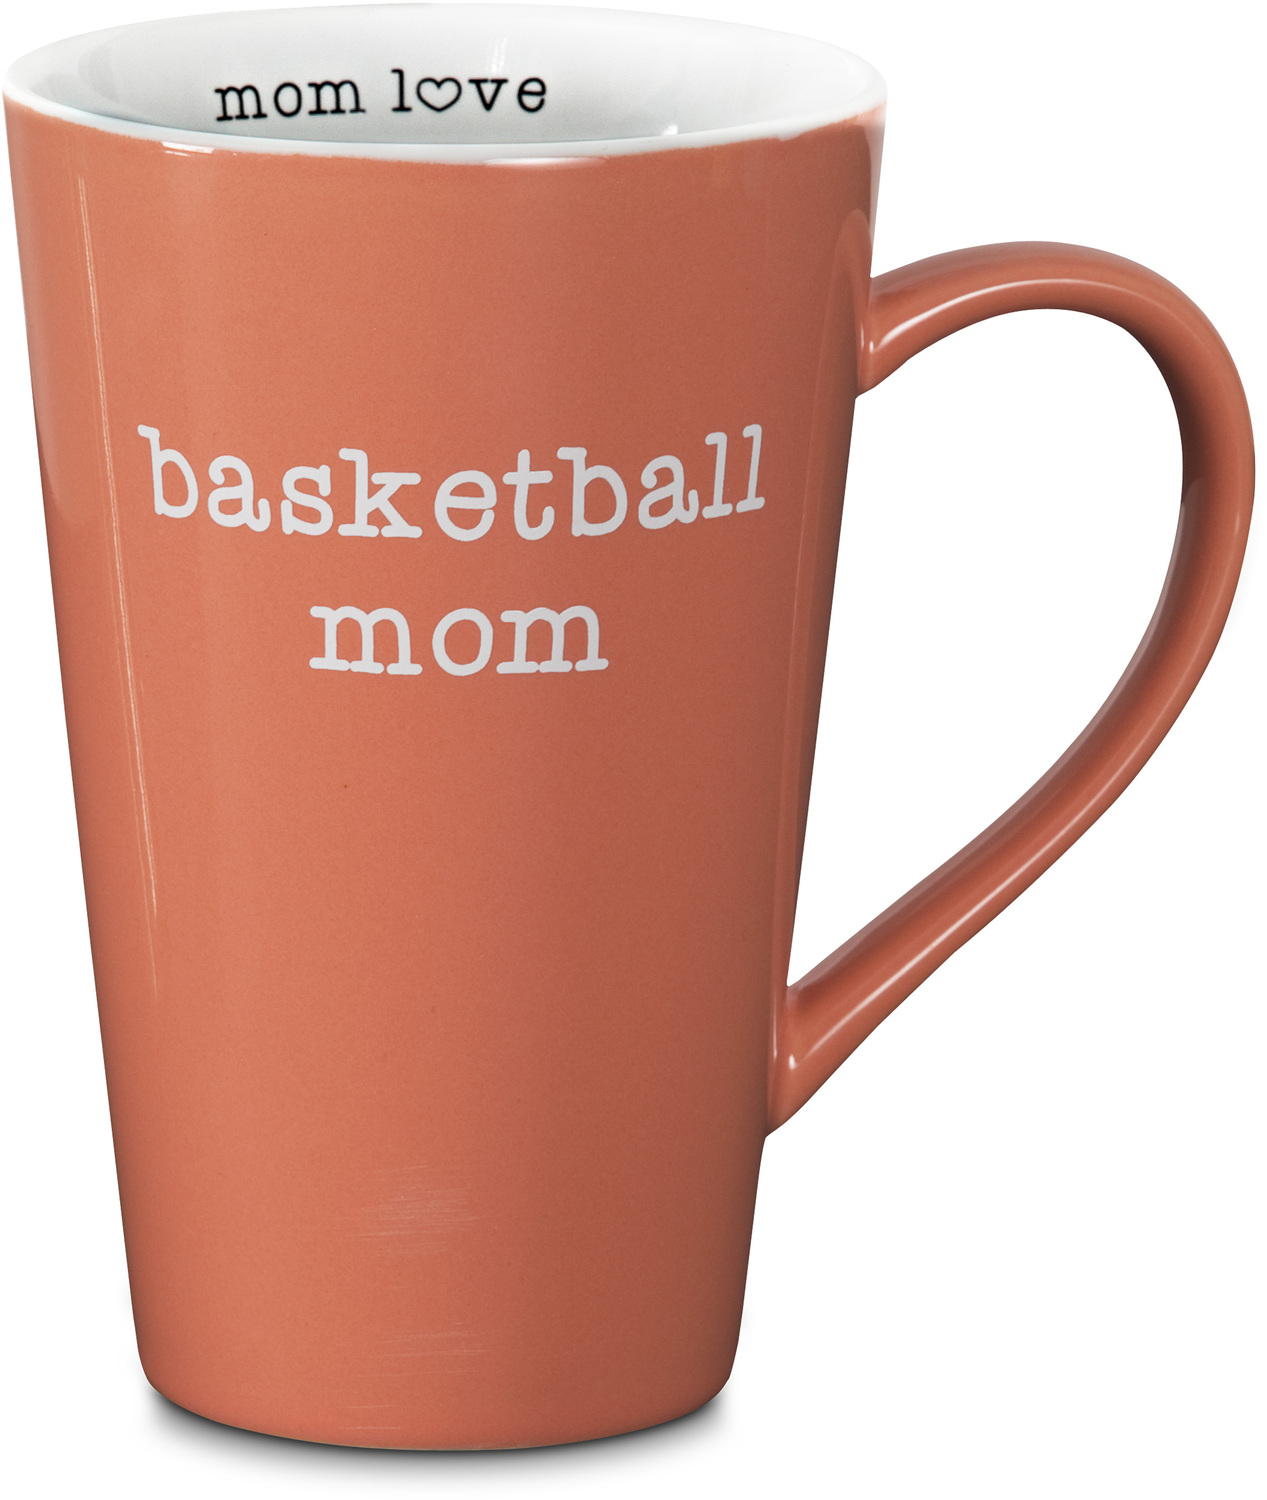 Basketball Mom by Mom Love - Basketball Mom - 5.5" -  18 oz Latte Mug